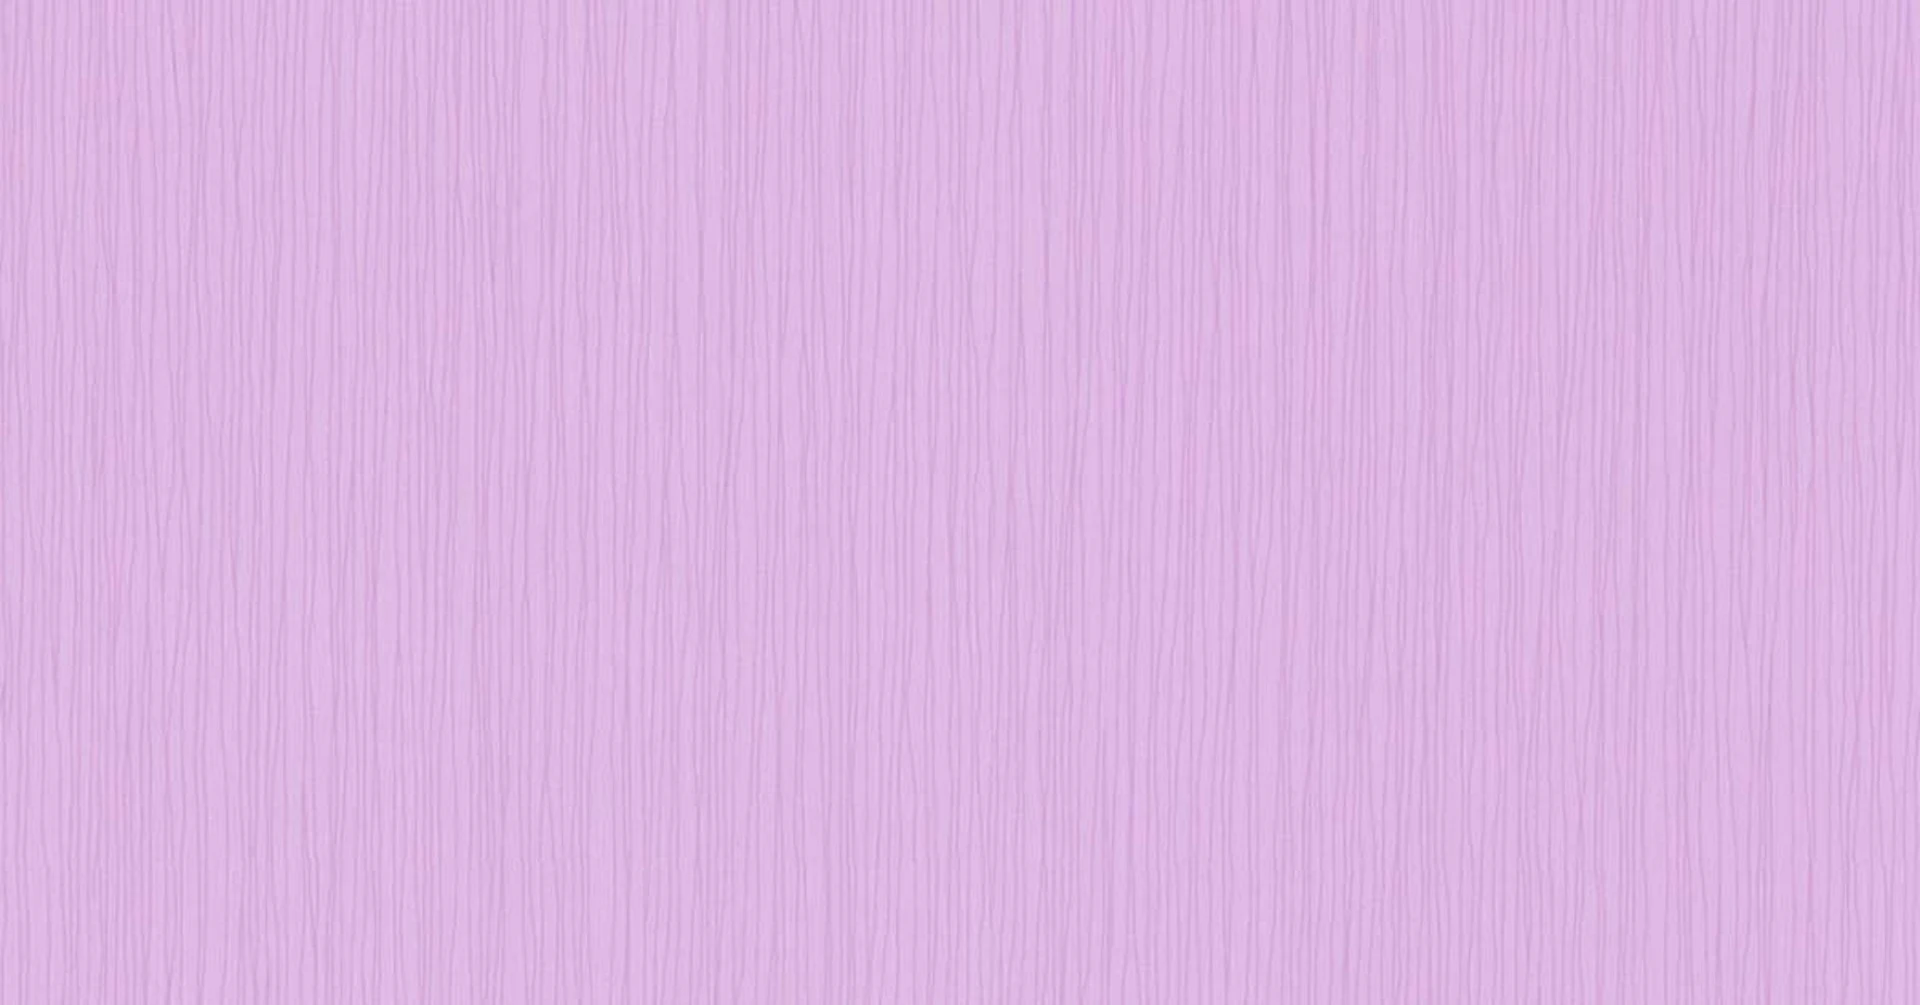 Paper Wallpaper Springtime 3 Stripes Classic Purple 341